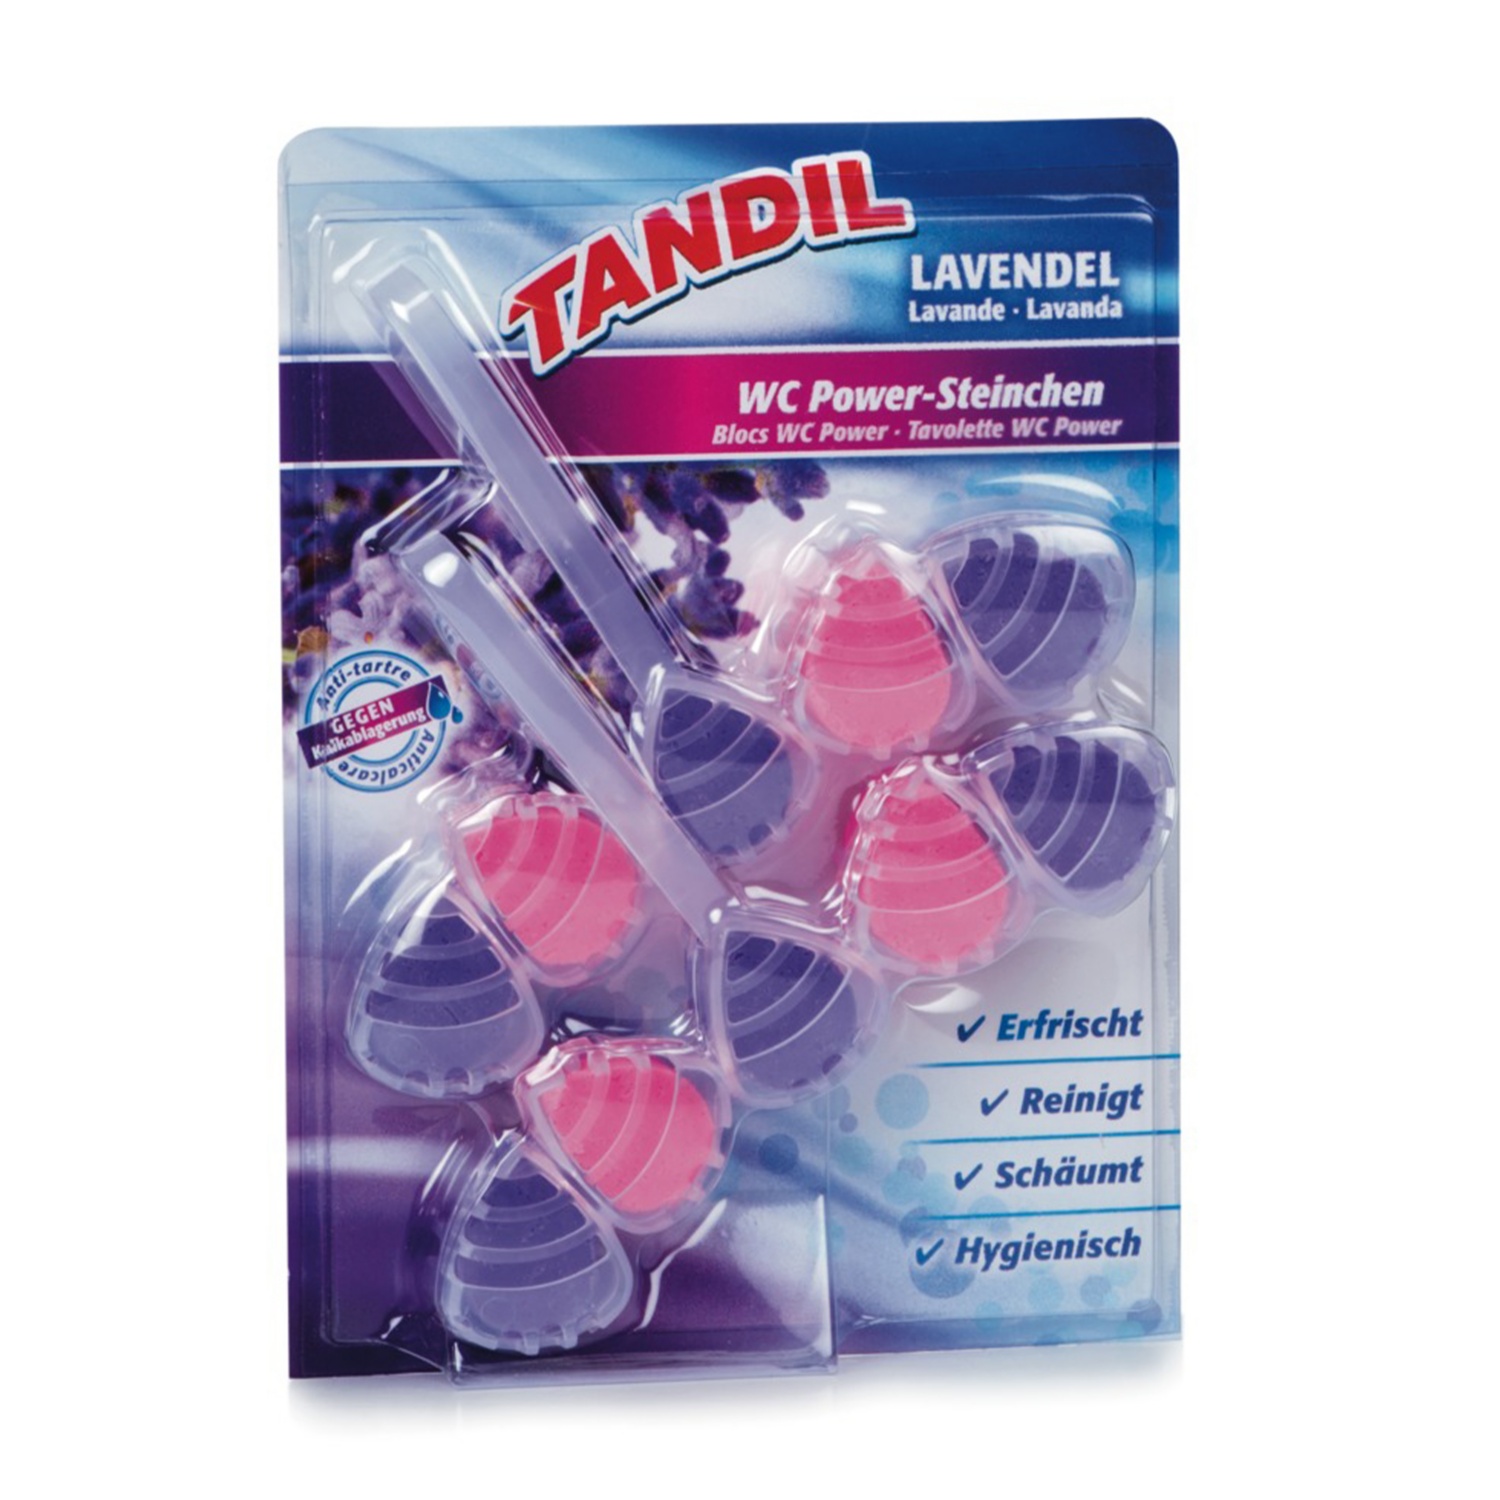 TANDIL WC-Power-Steinchen, Lavendel